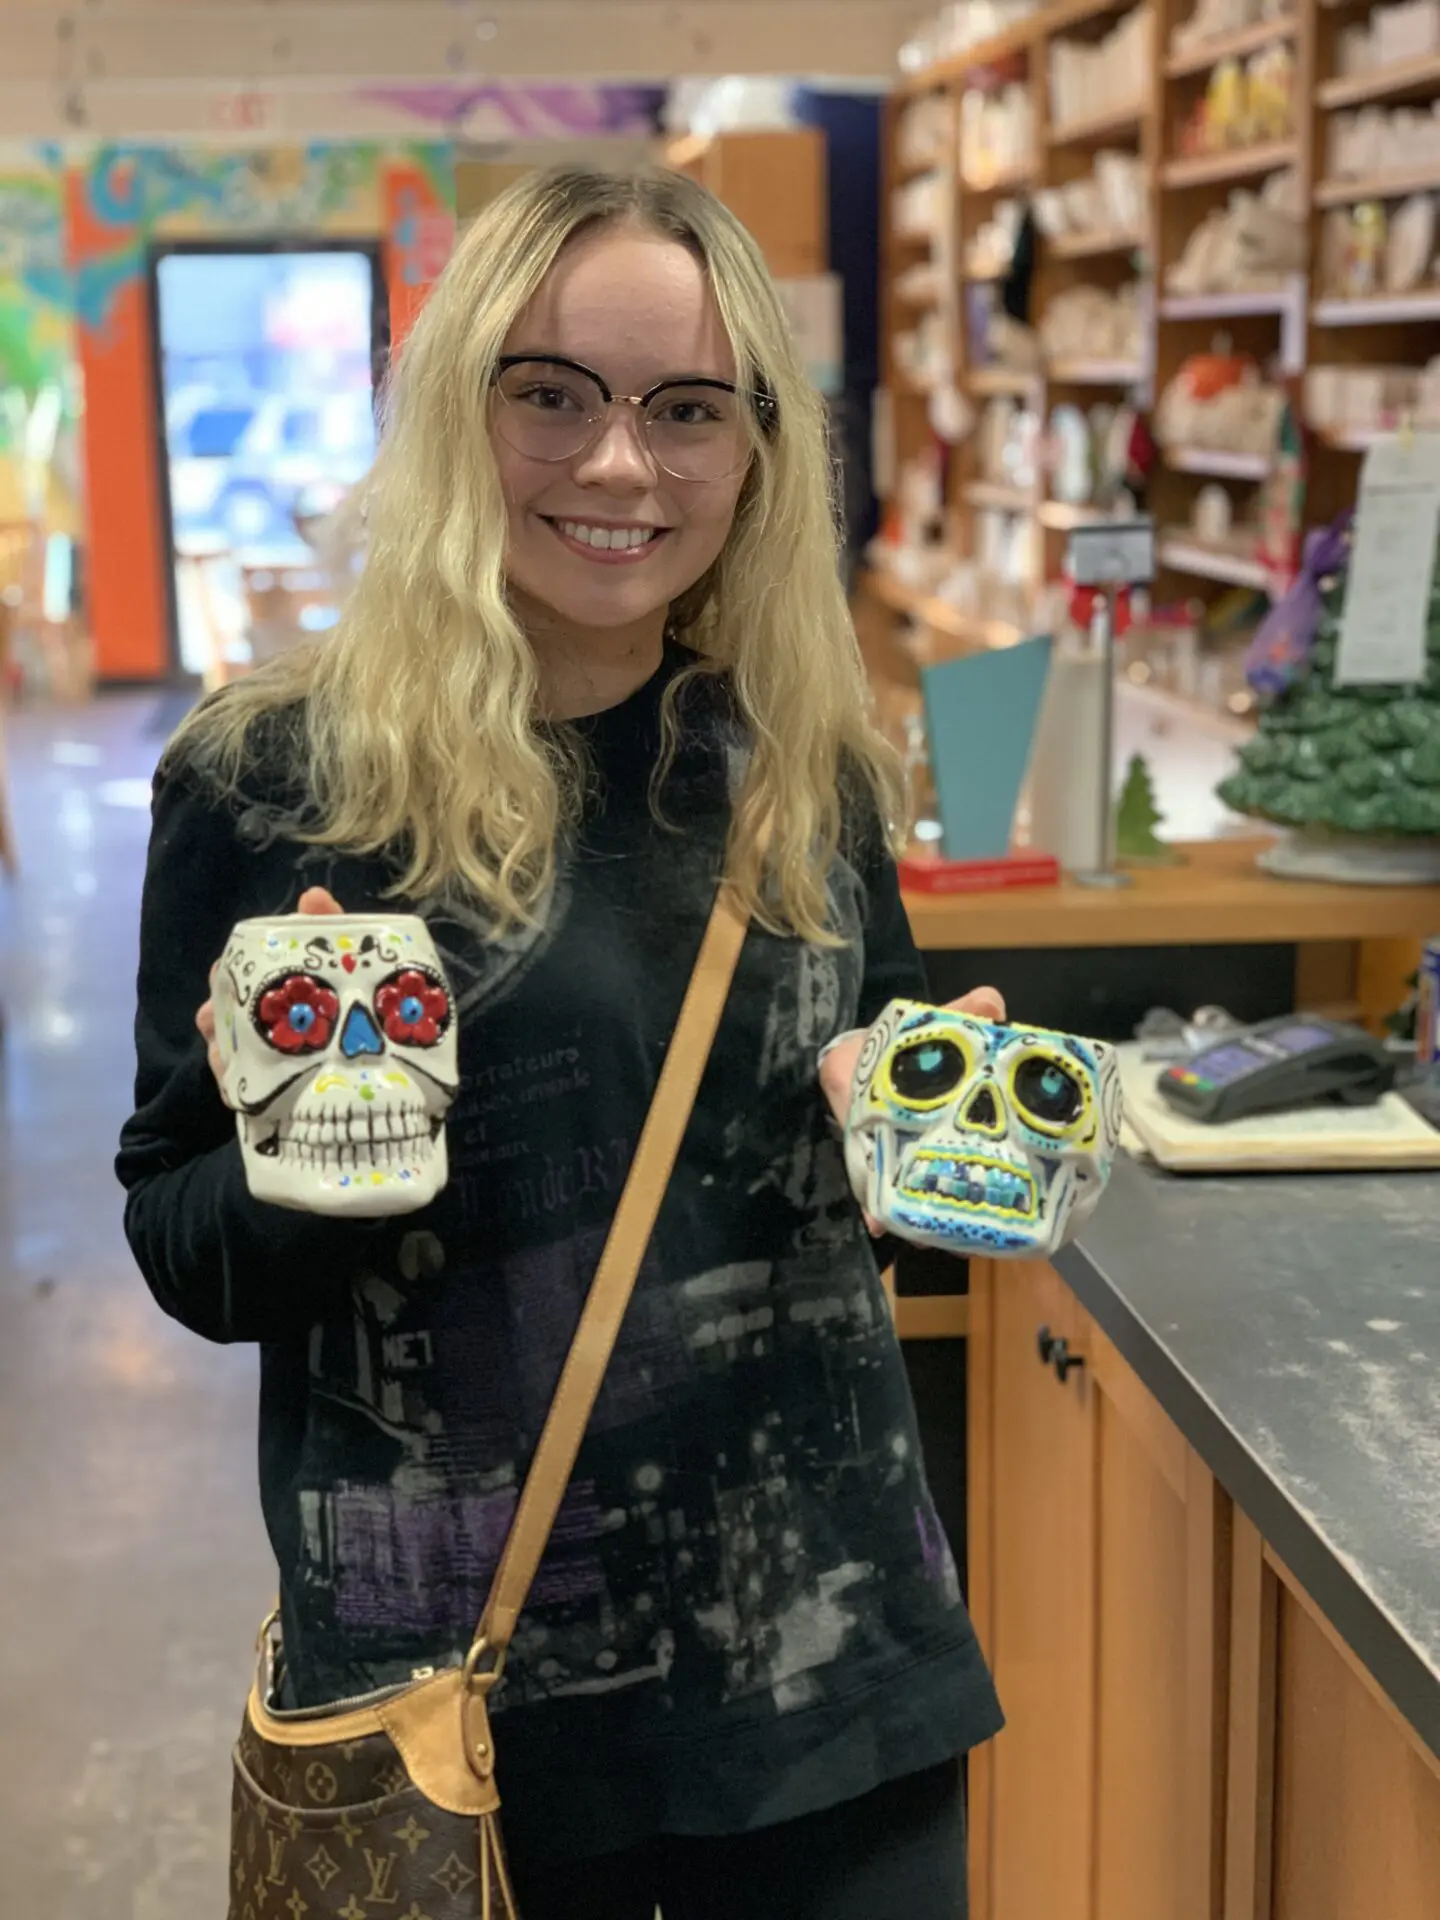 Young beautiful woman holding skeleton head mugs